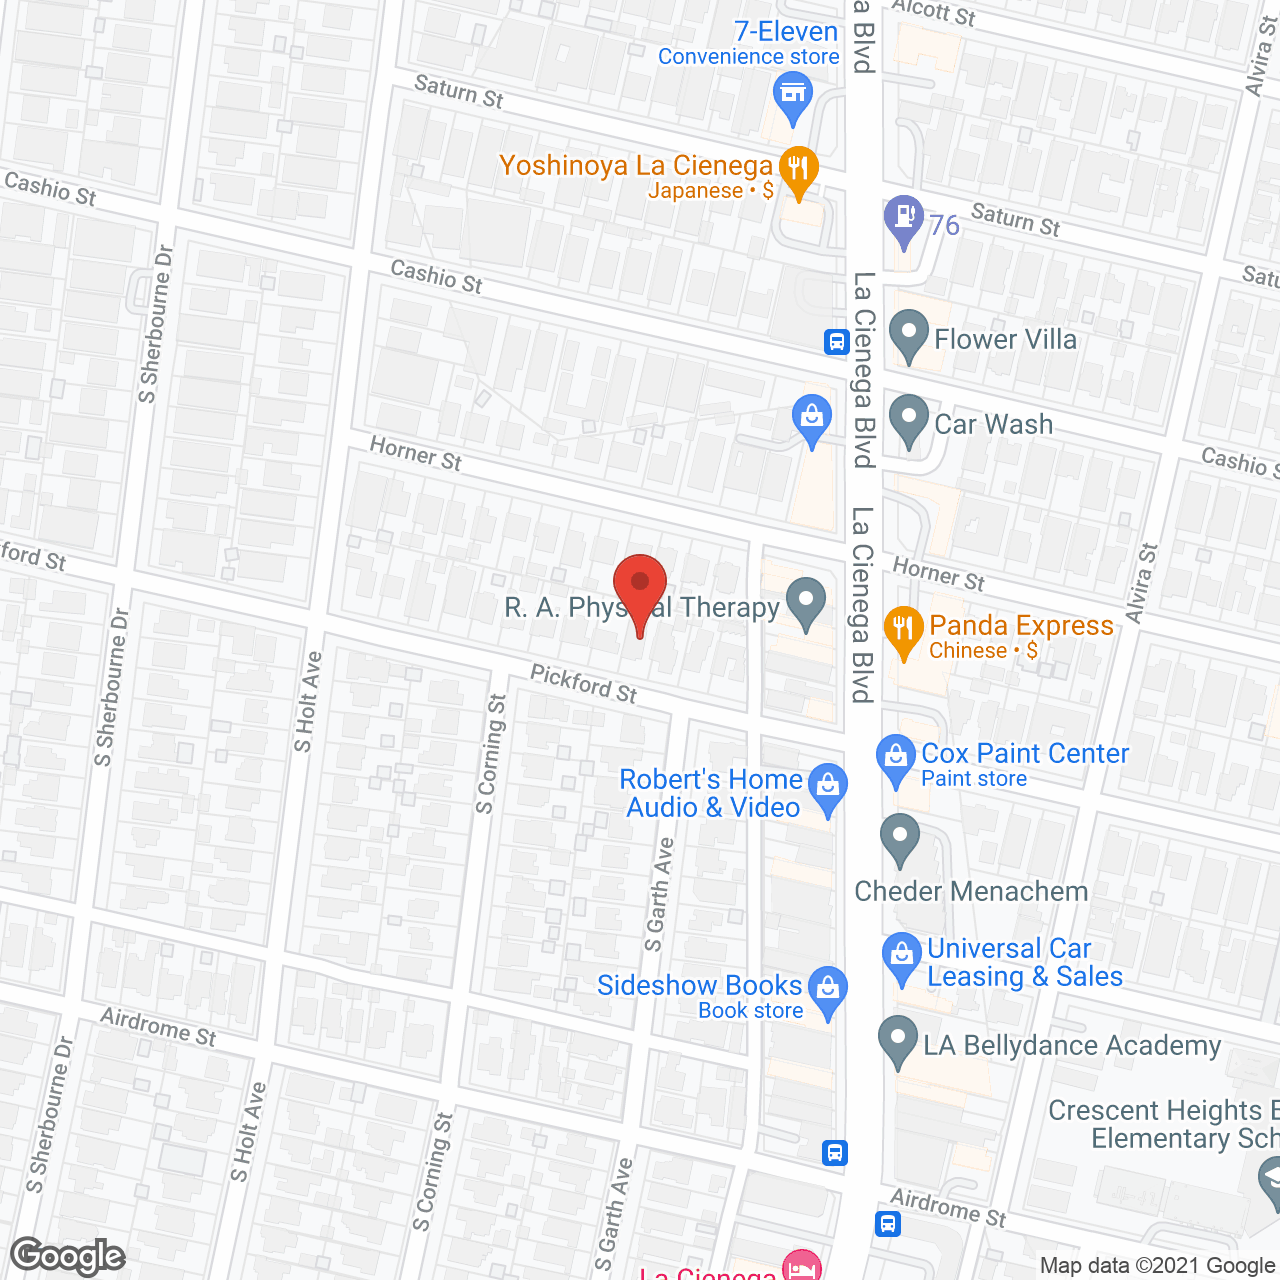 Beit Shalom in google map